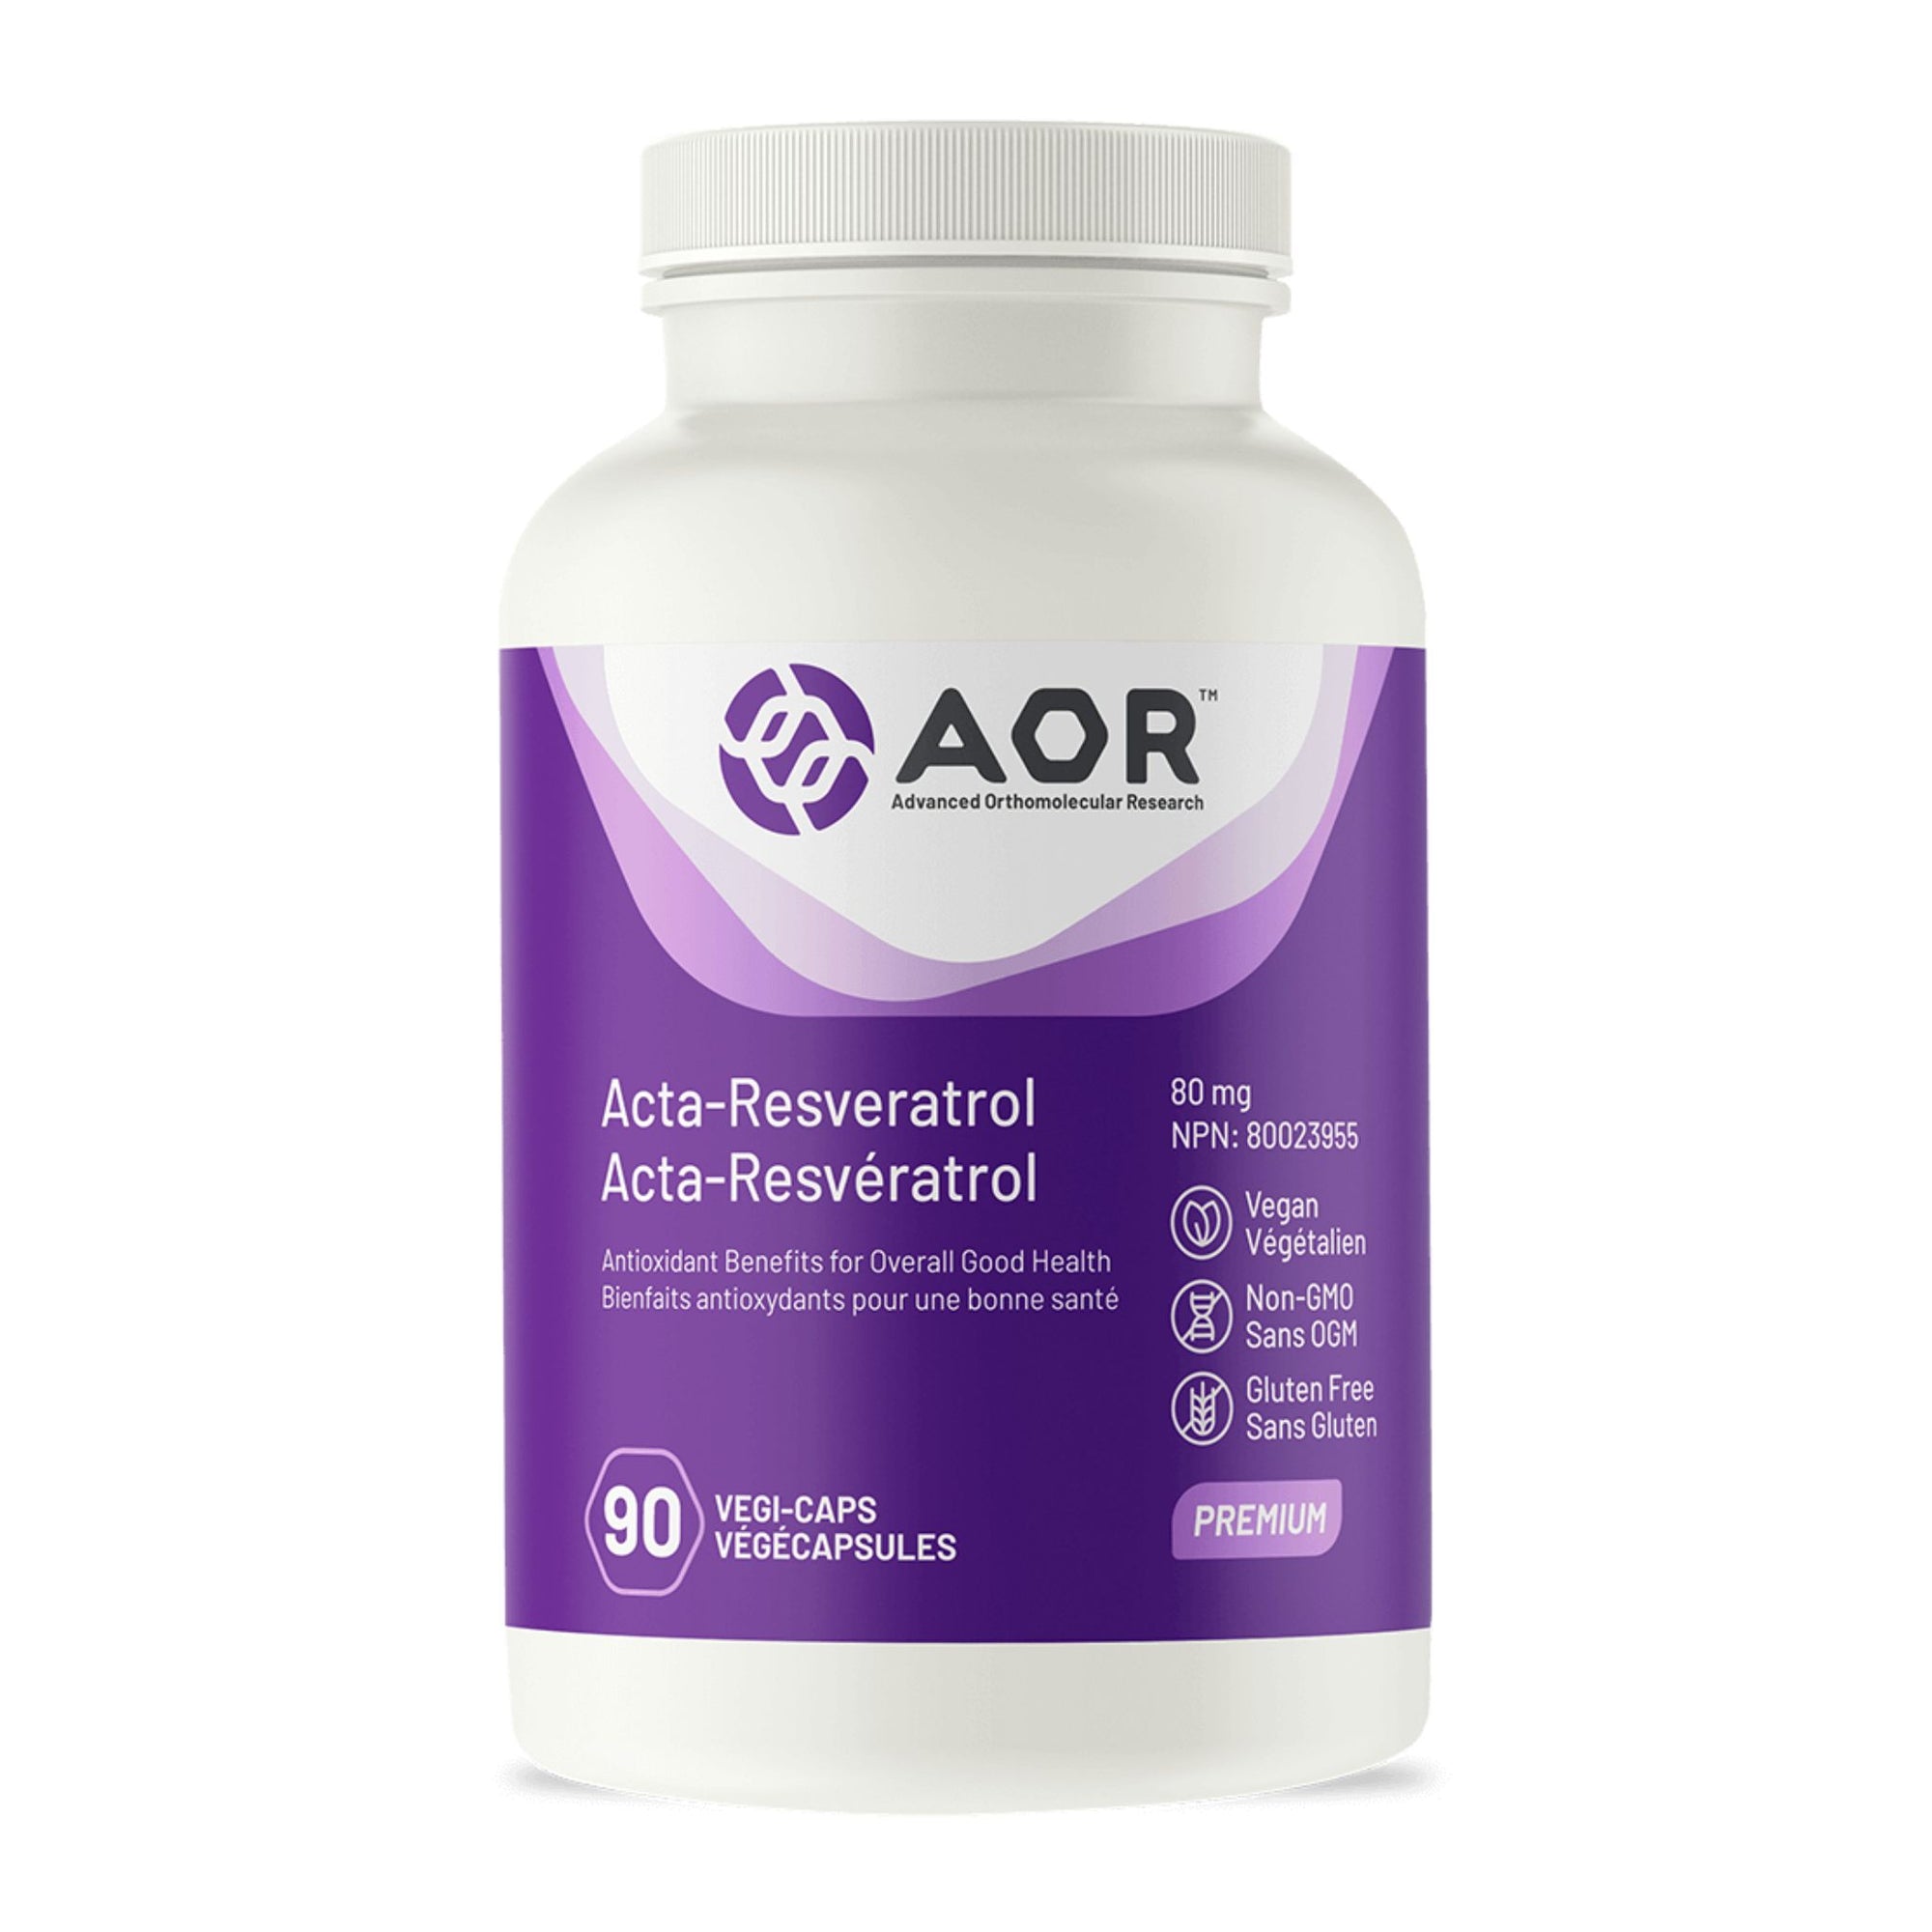 AOR Acta-resveratrol 90 vegetable capsules - 80mg - antioxidant benefits for overall good health - vegan, non-GMO, gluten free